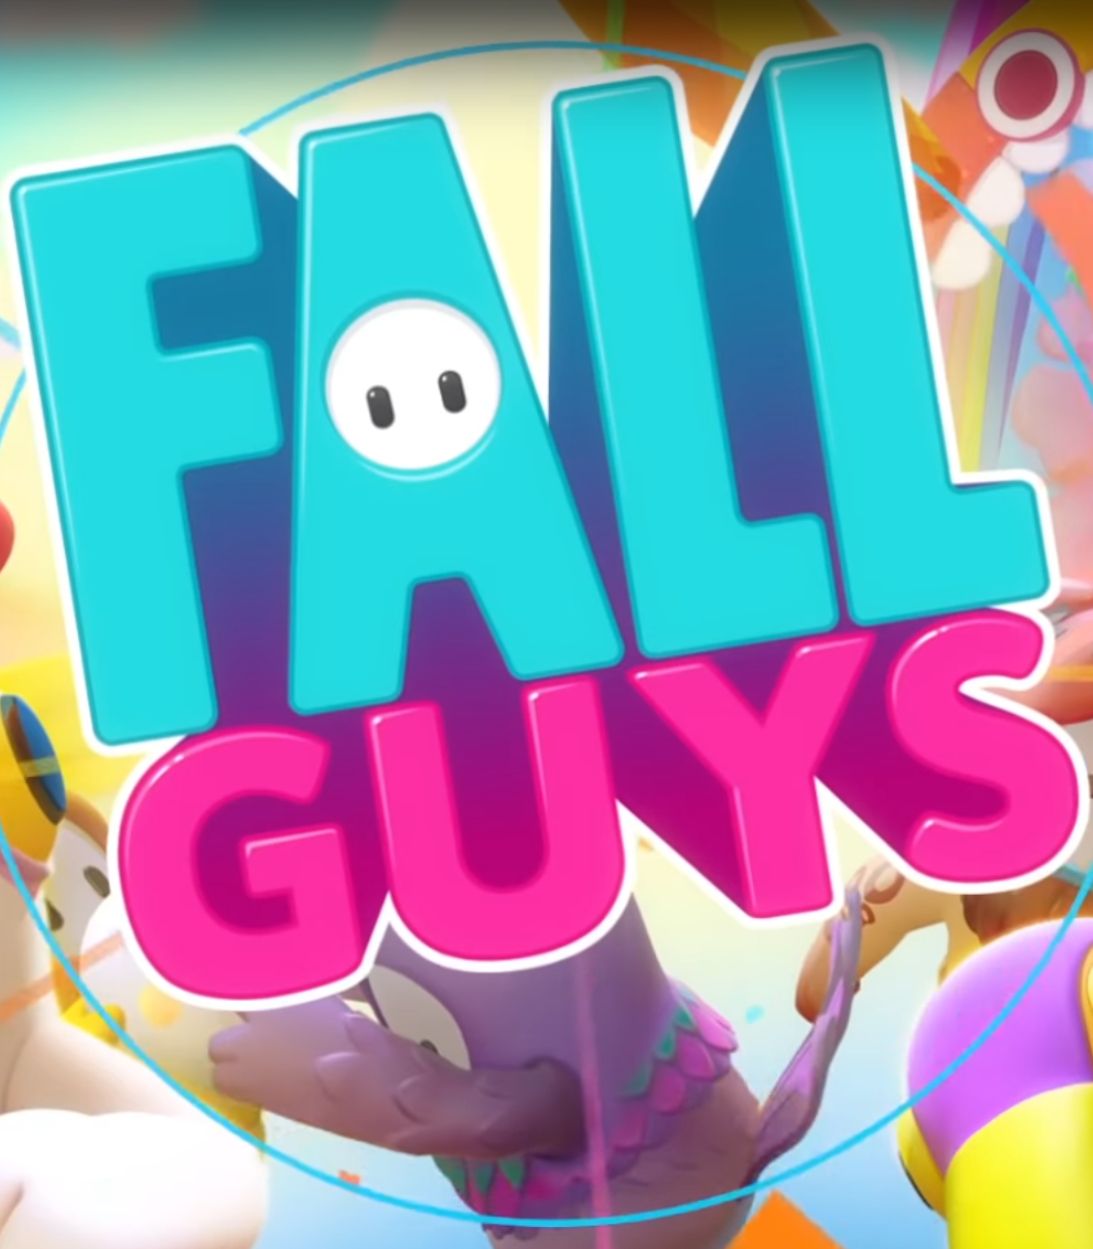 Fall Guys update title. 1093